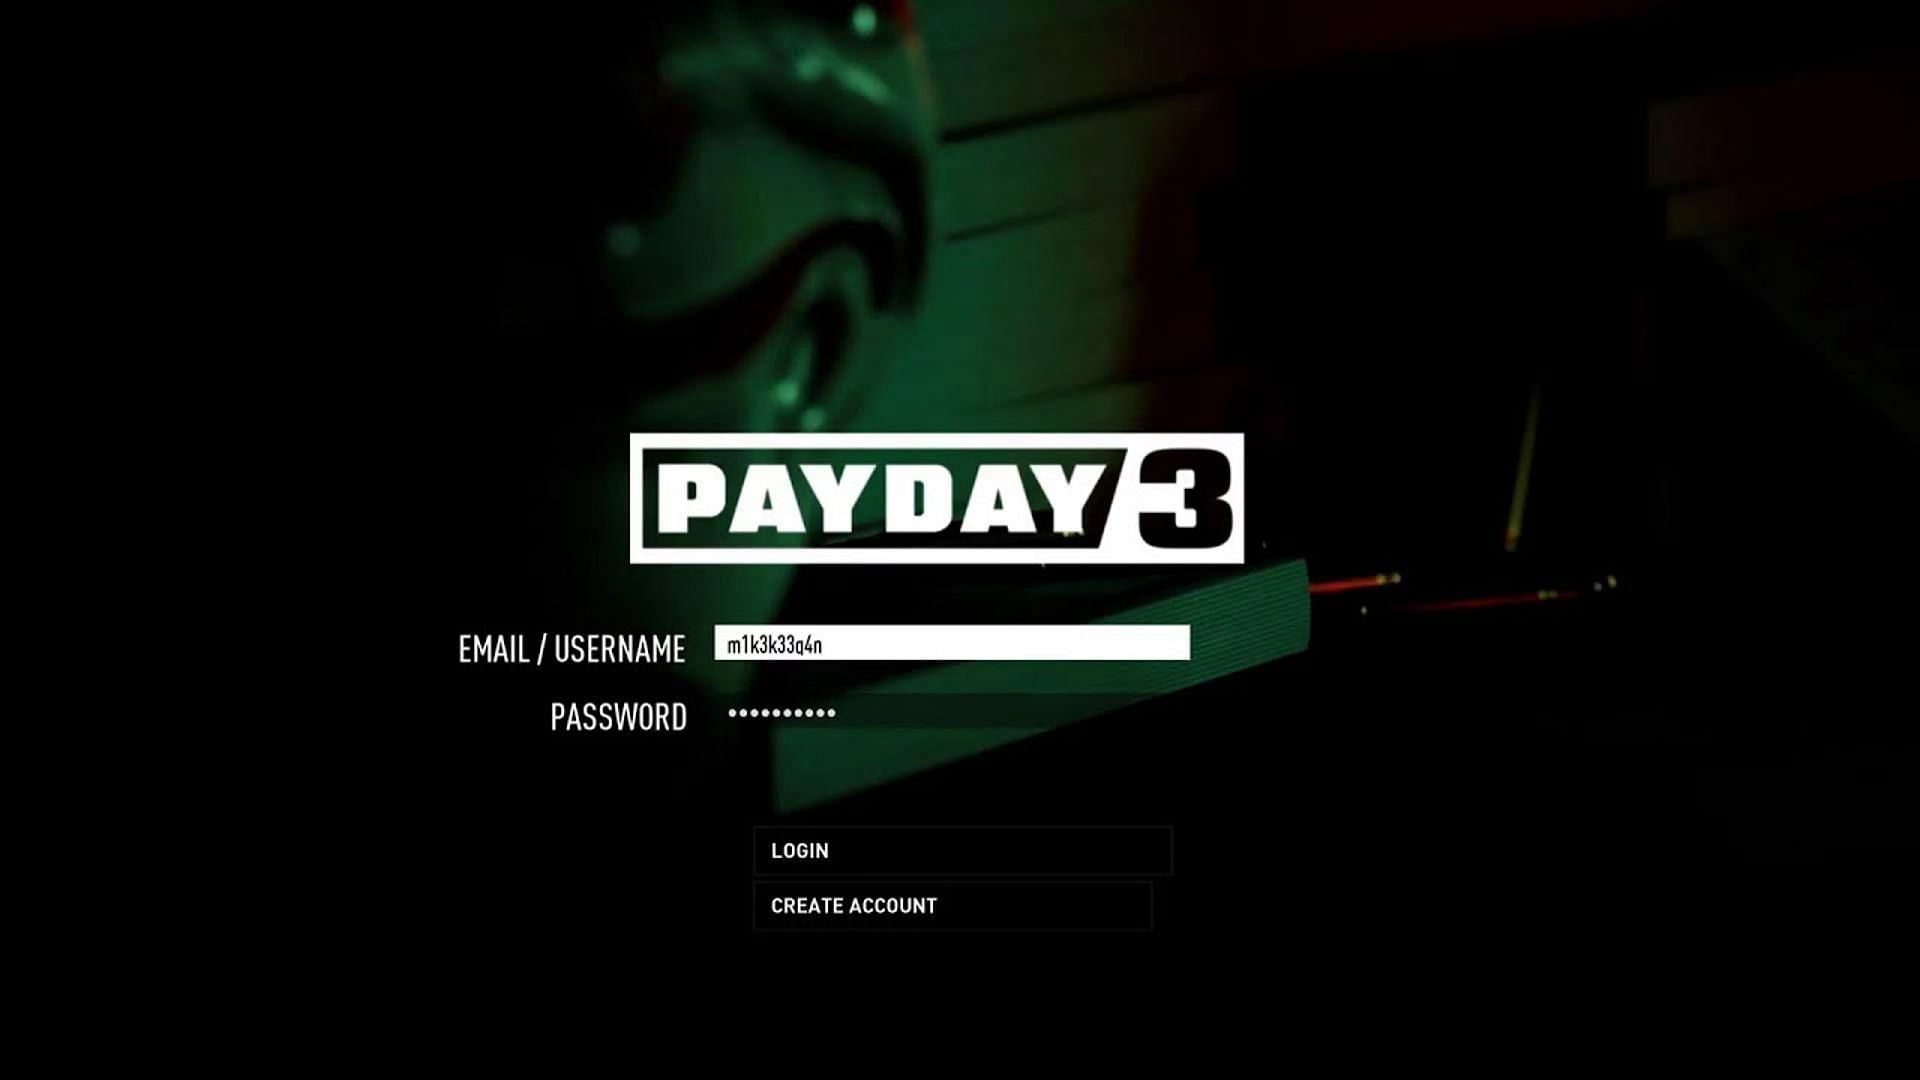 Is Payday 3 cross-platform?